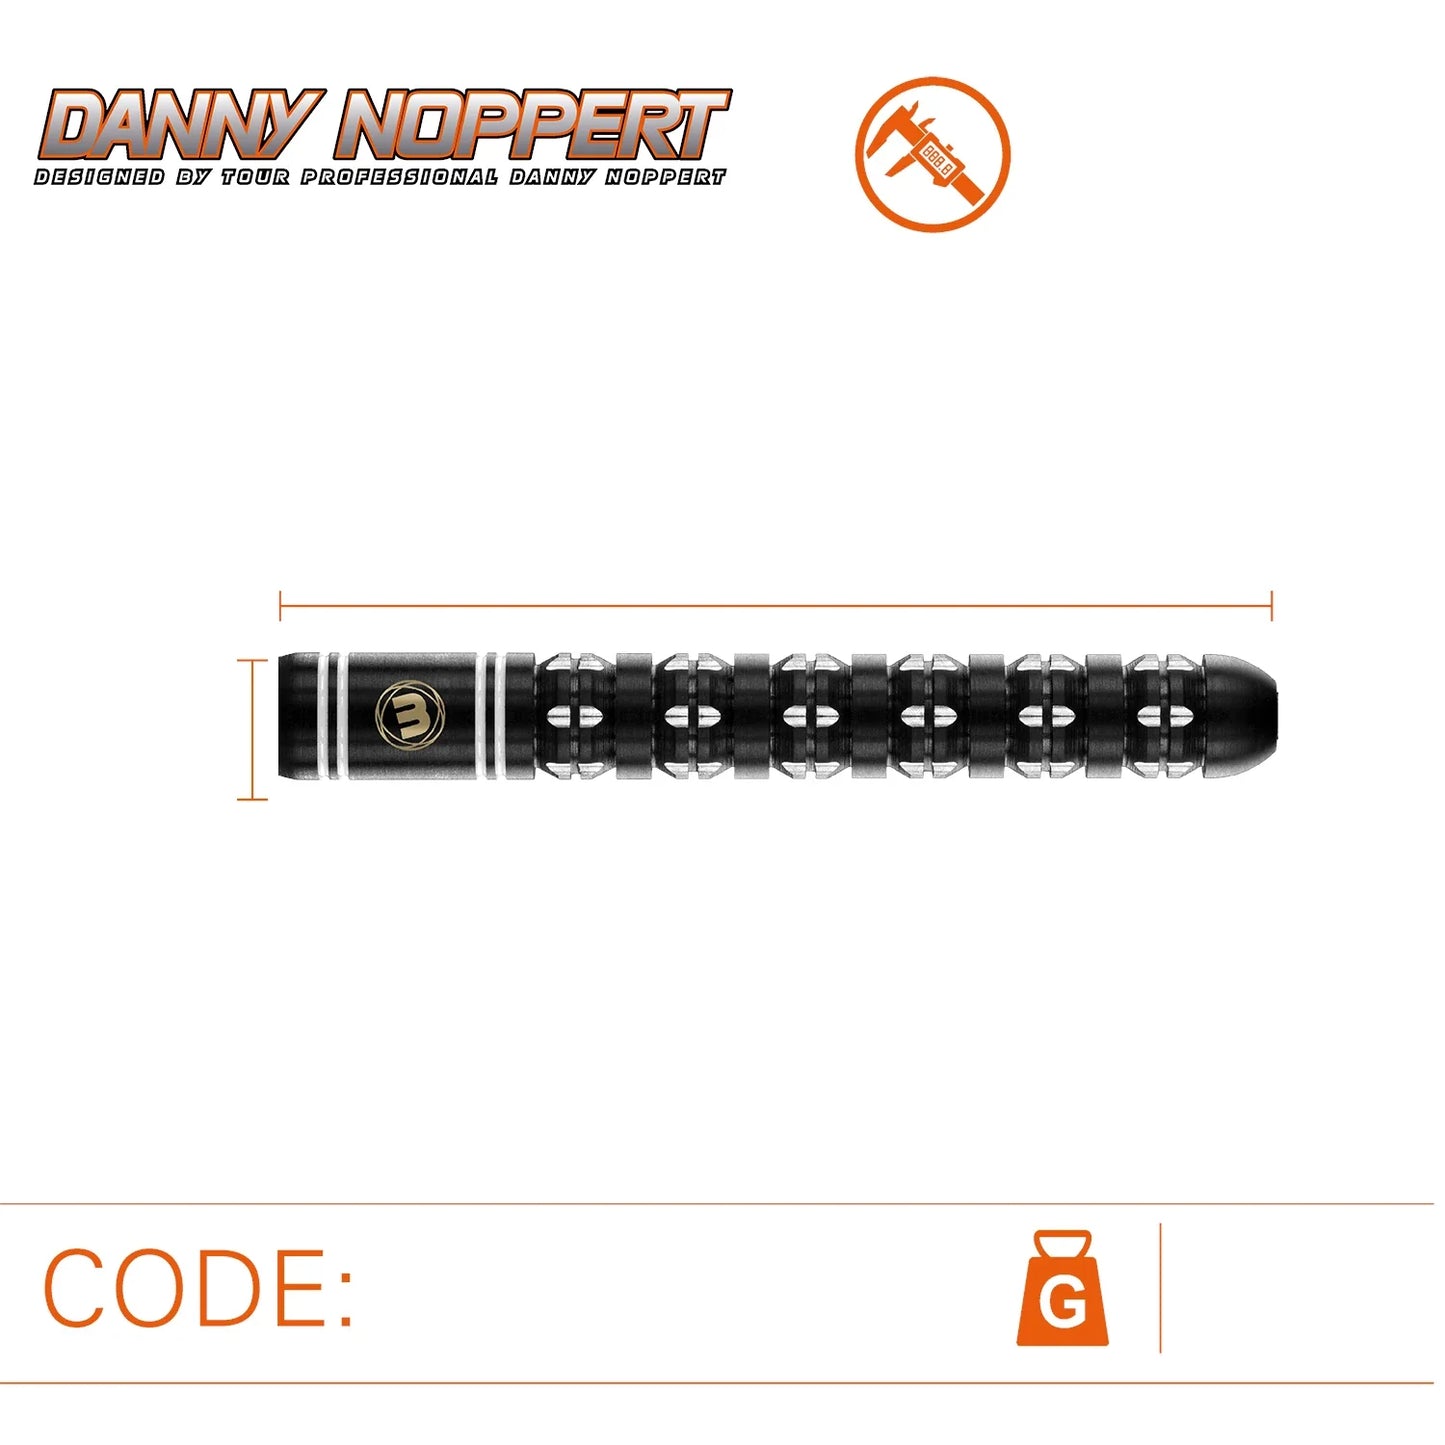 Winmau Danny Noppert Freeze Edition 24g Darts